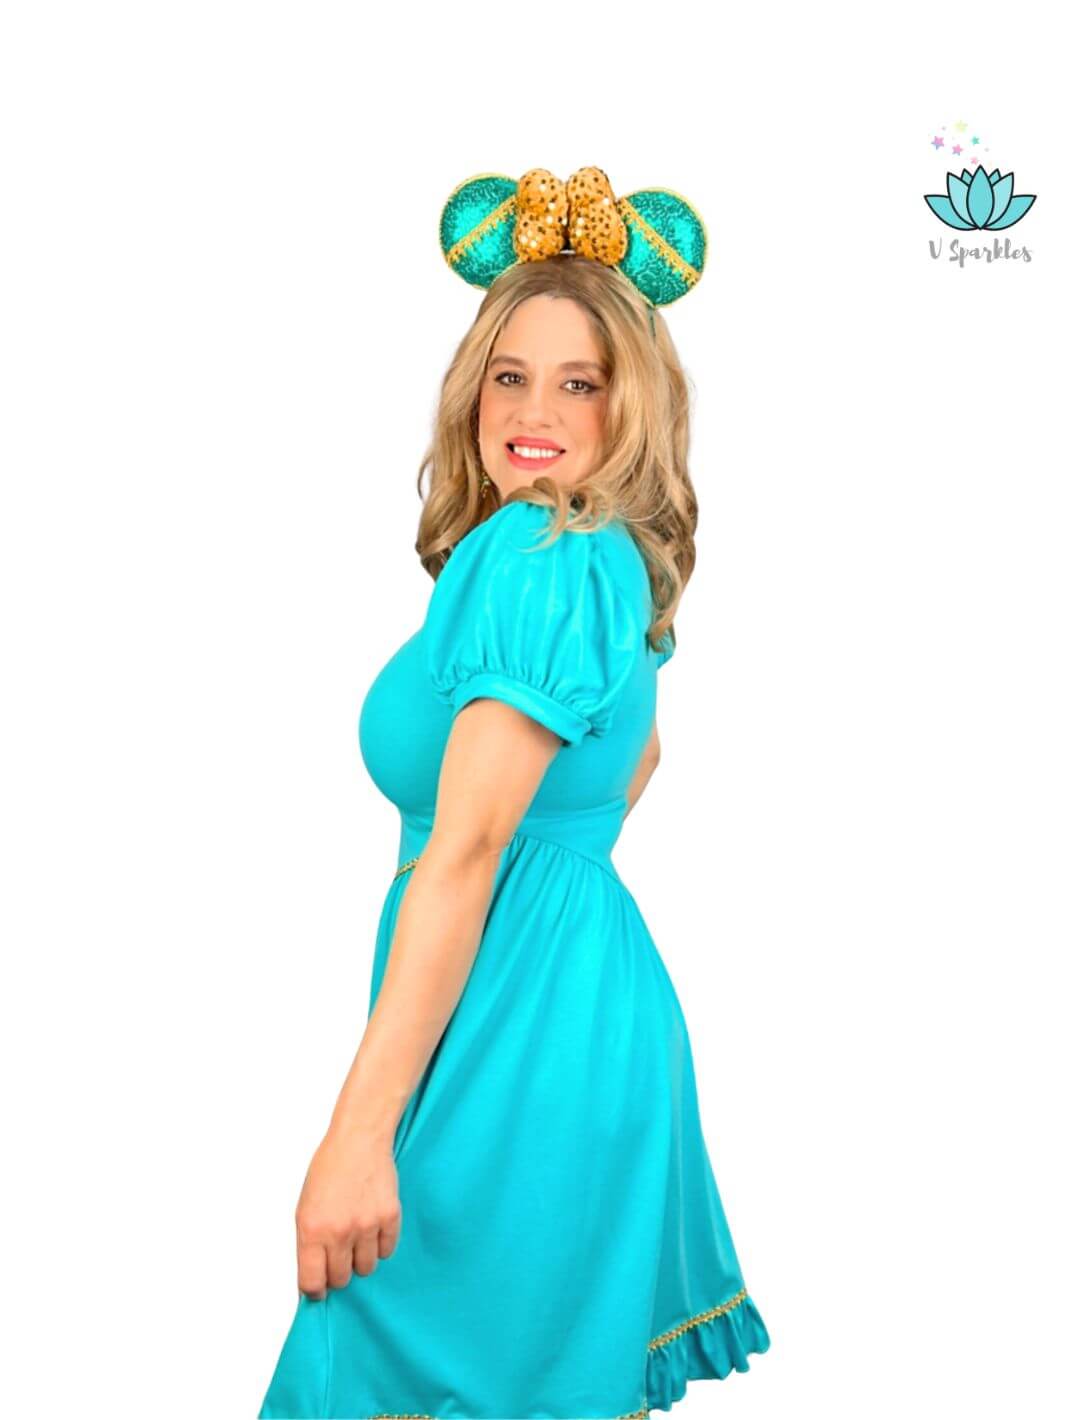 Jasmine dress up available online at vsparkles